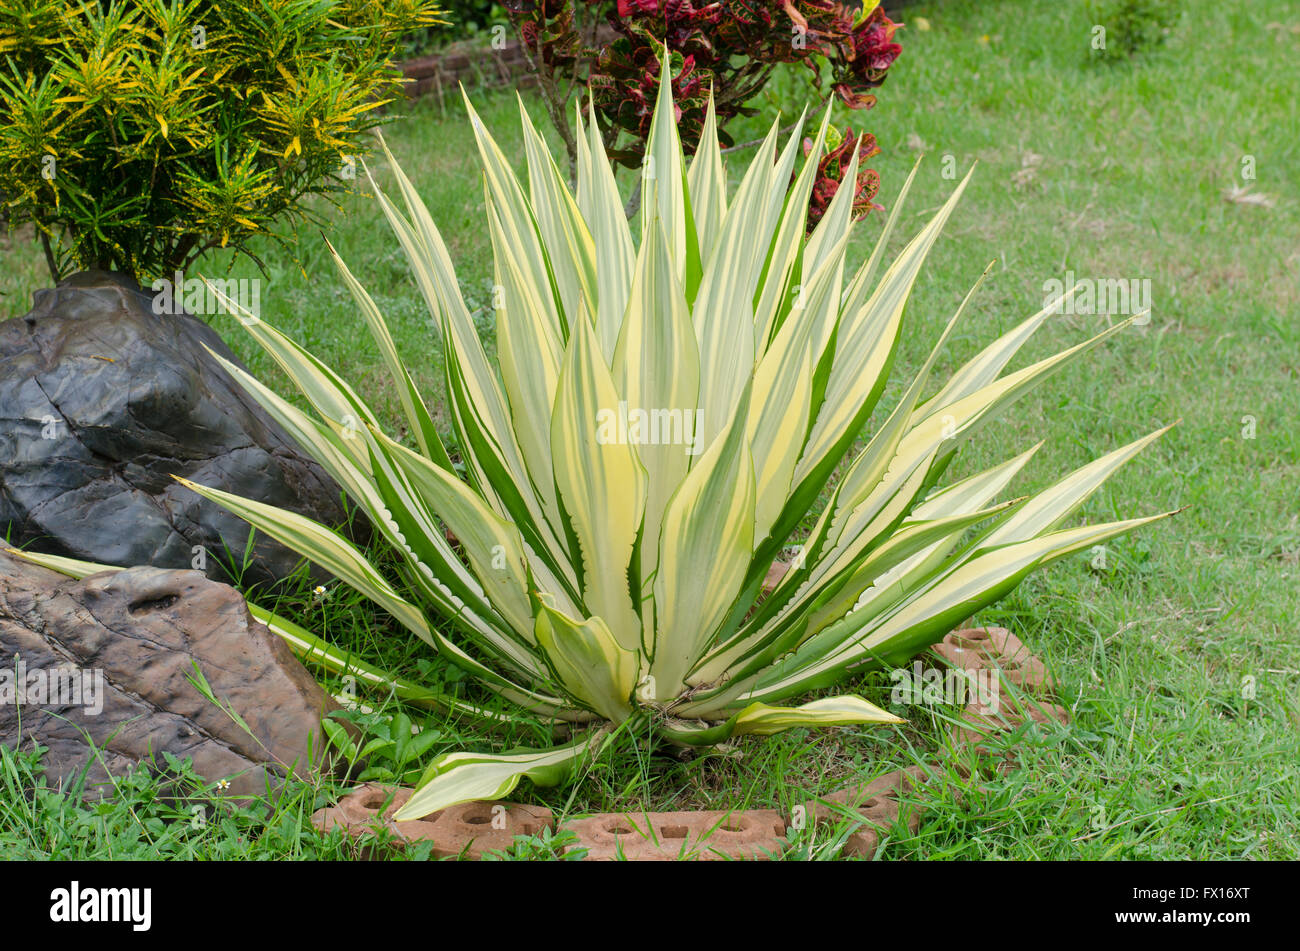 Ornamental Plants - Agave Caribbean - scientific name Agave angustifolia Stock Photo